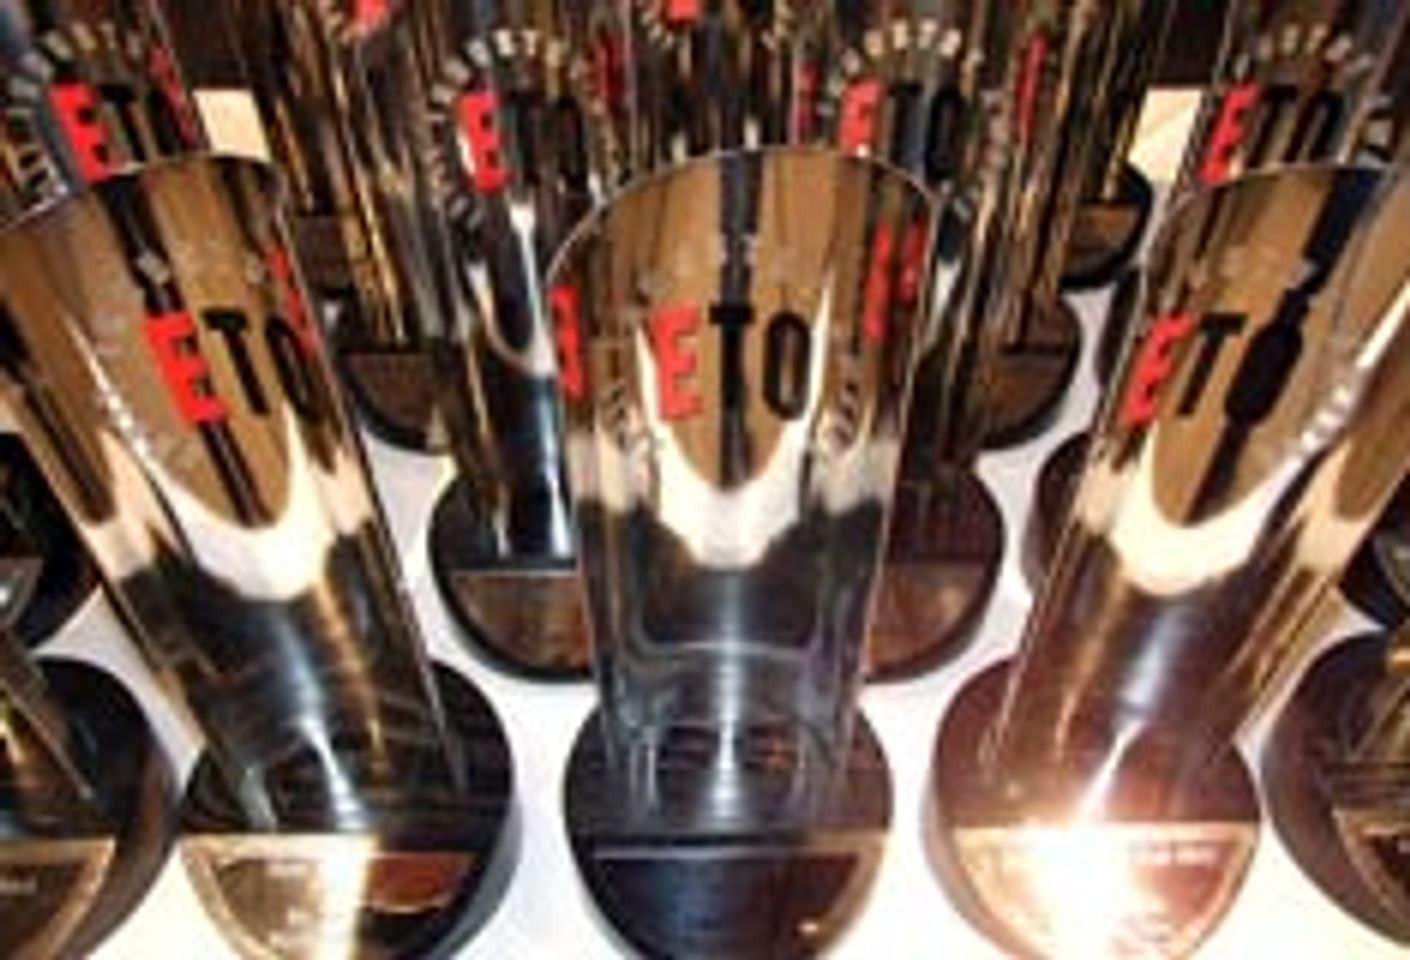 2008 ETO Award-Winners Announced